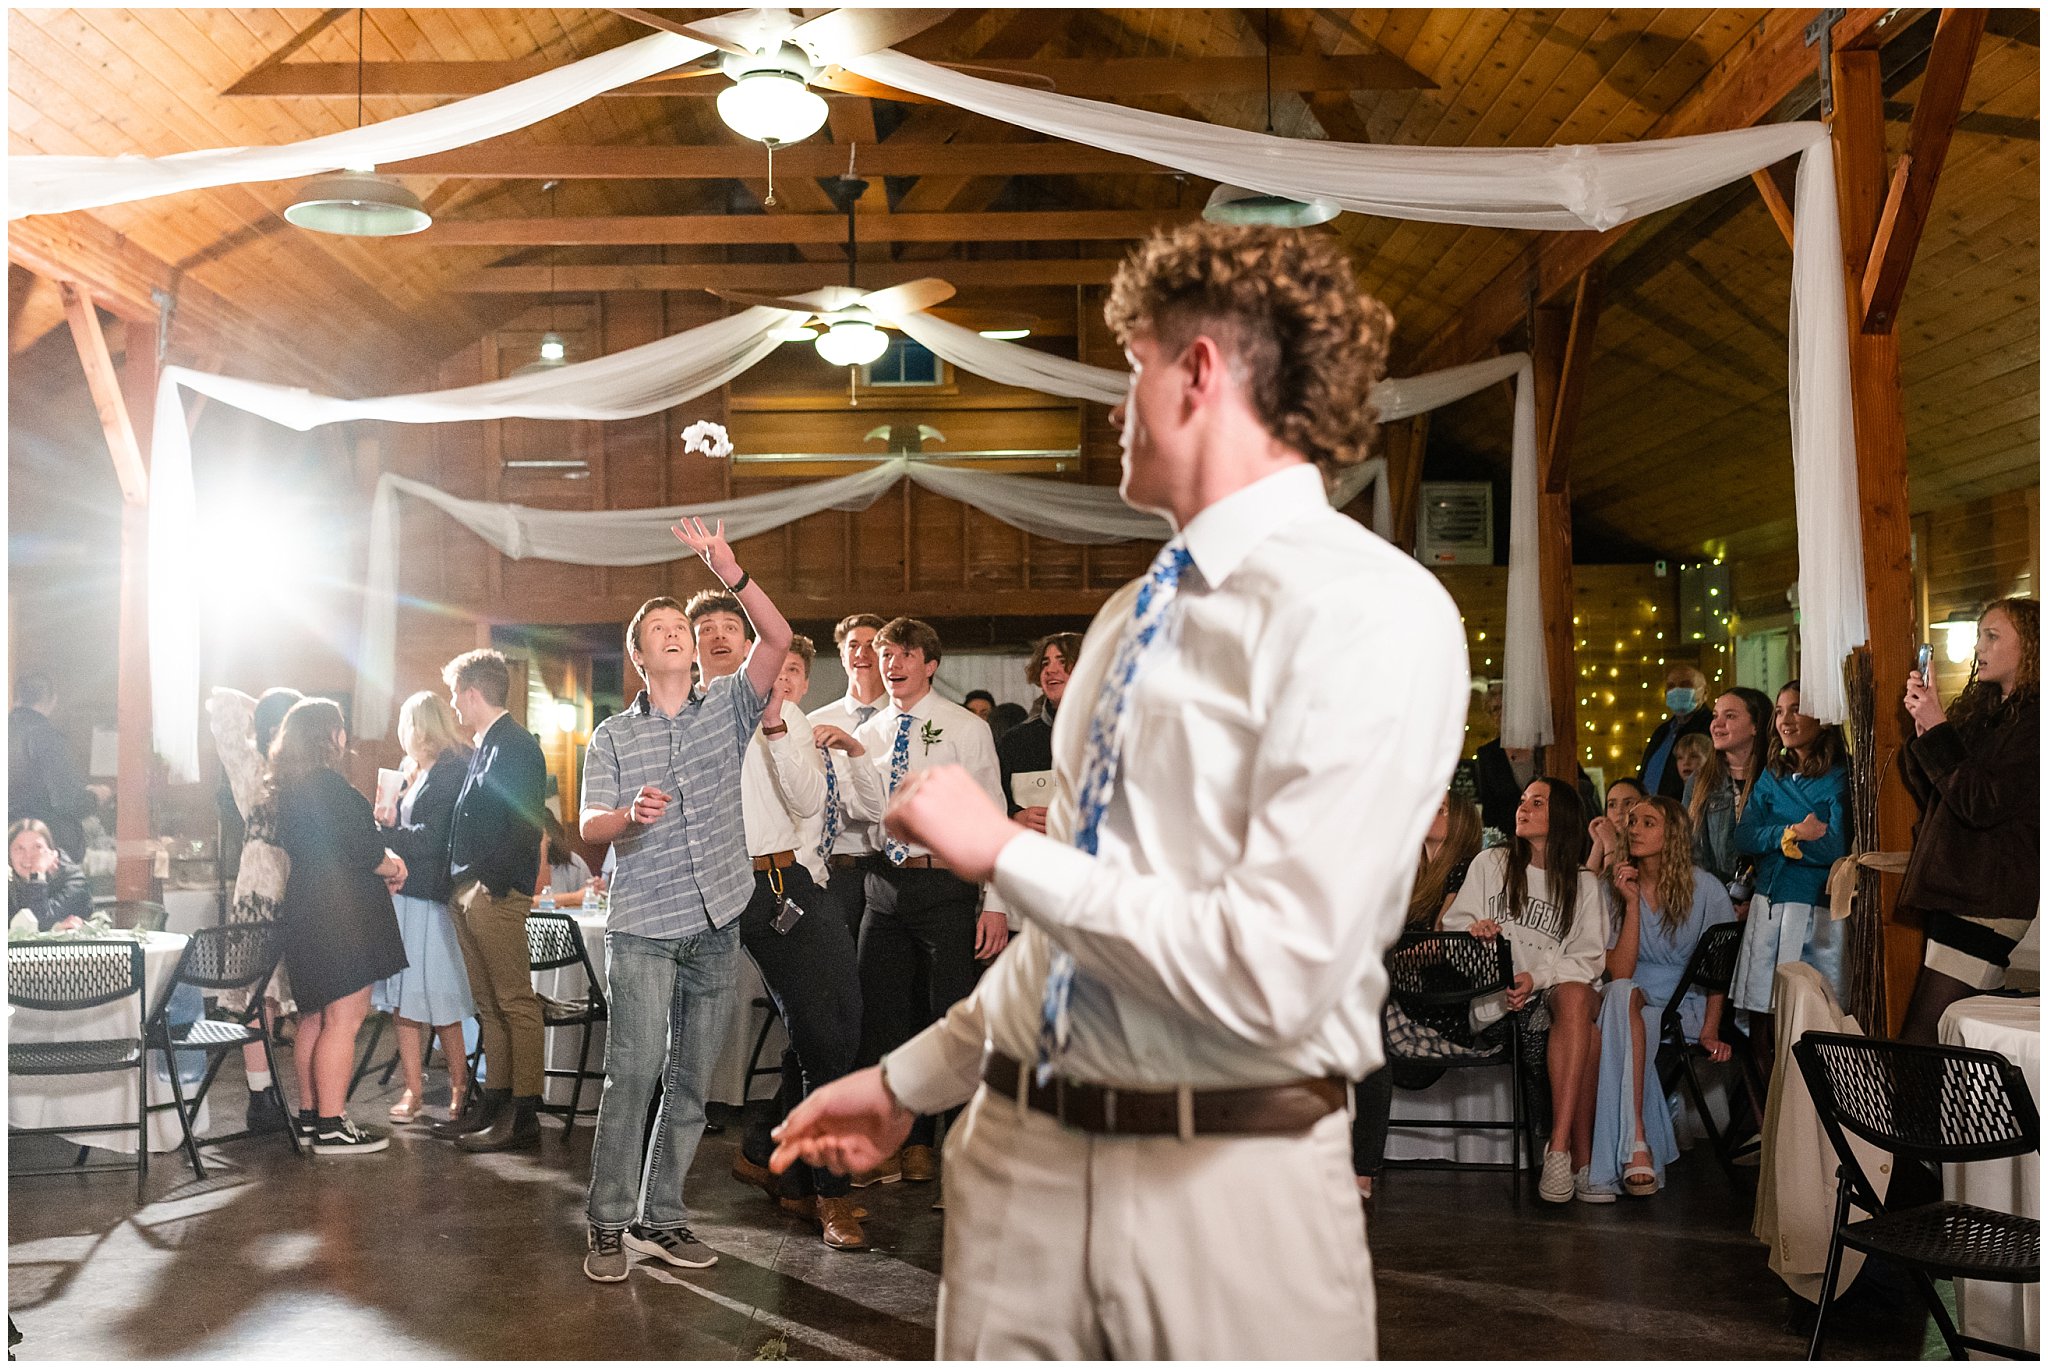 Garter toss during barn wedding | Oquirrh Mountain Temple and Draper Day Barn Winter Wedding | Jessie and Dallin Photography